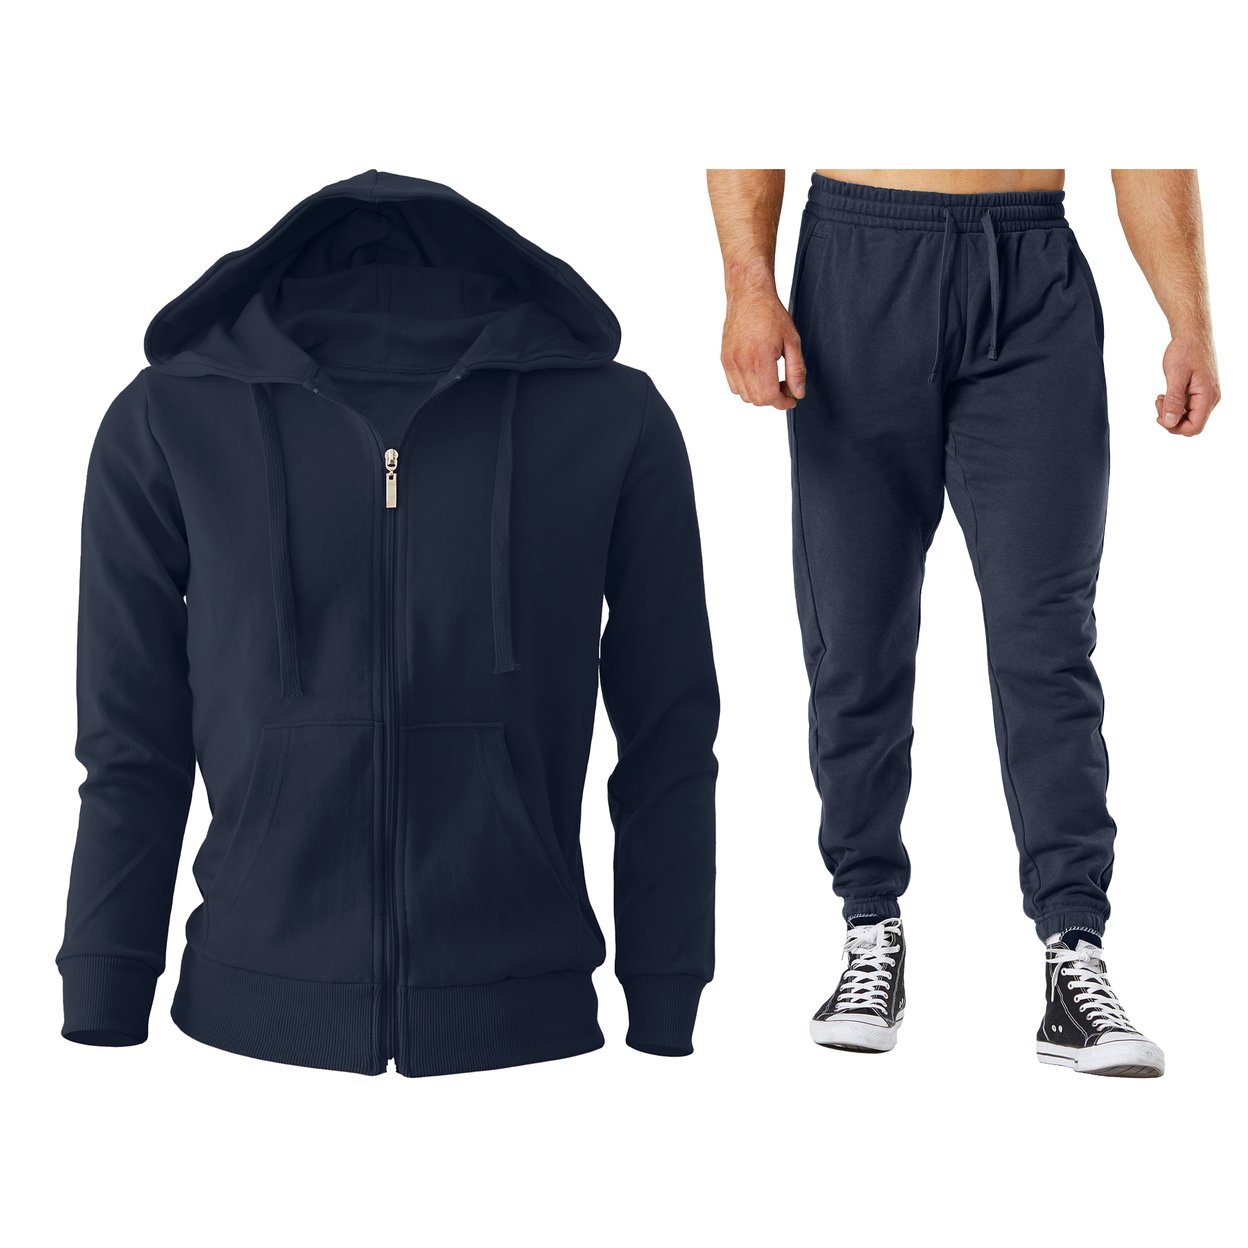 4-Piece: Men's Winter Warm Cozy Athletic Multi-Pockets BIG & TALL Sweatsuit Set - Navy, Small